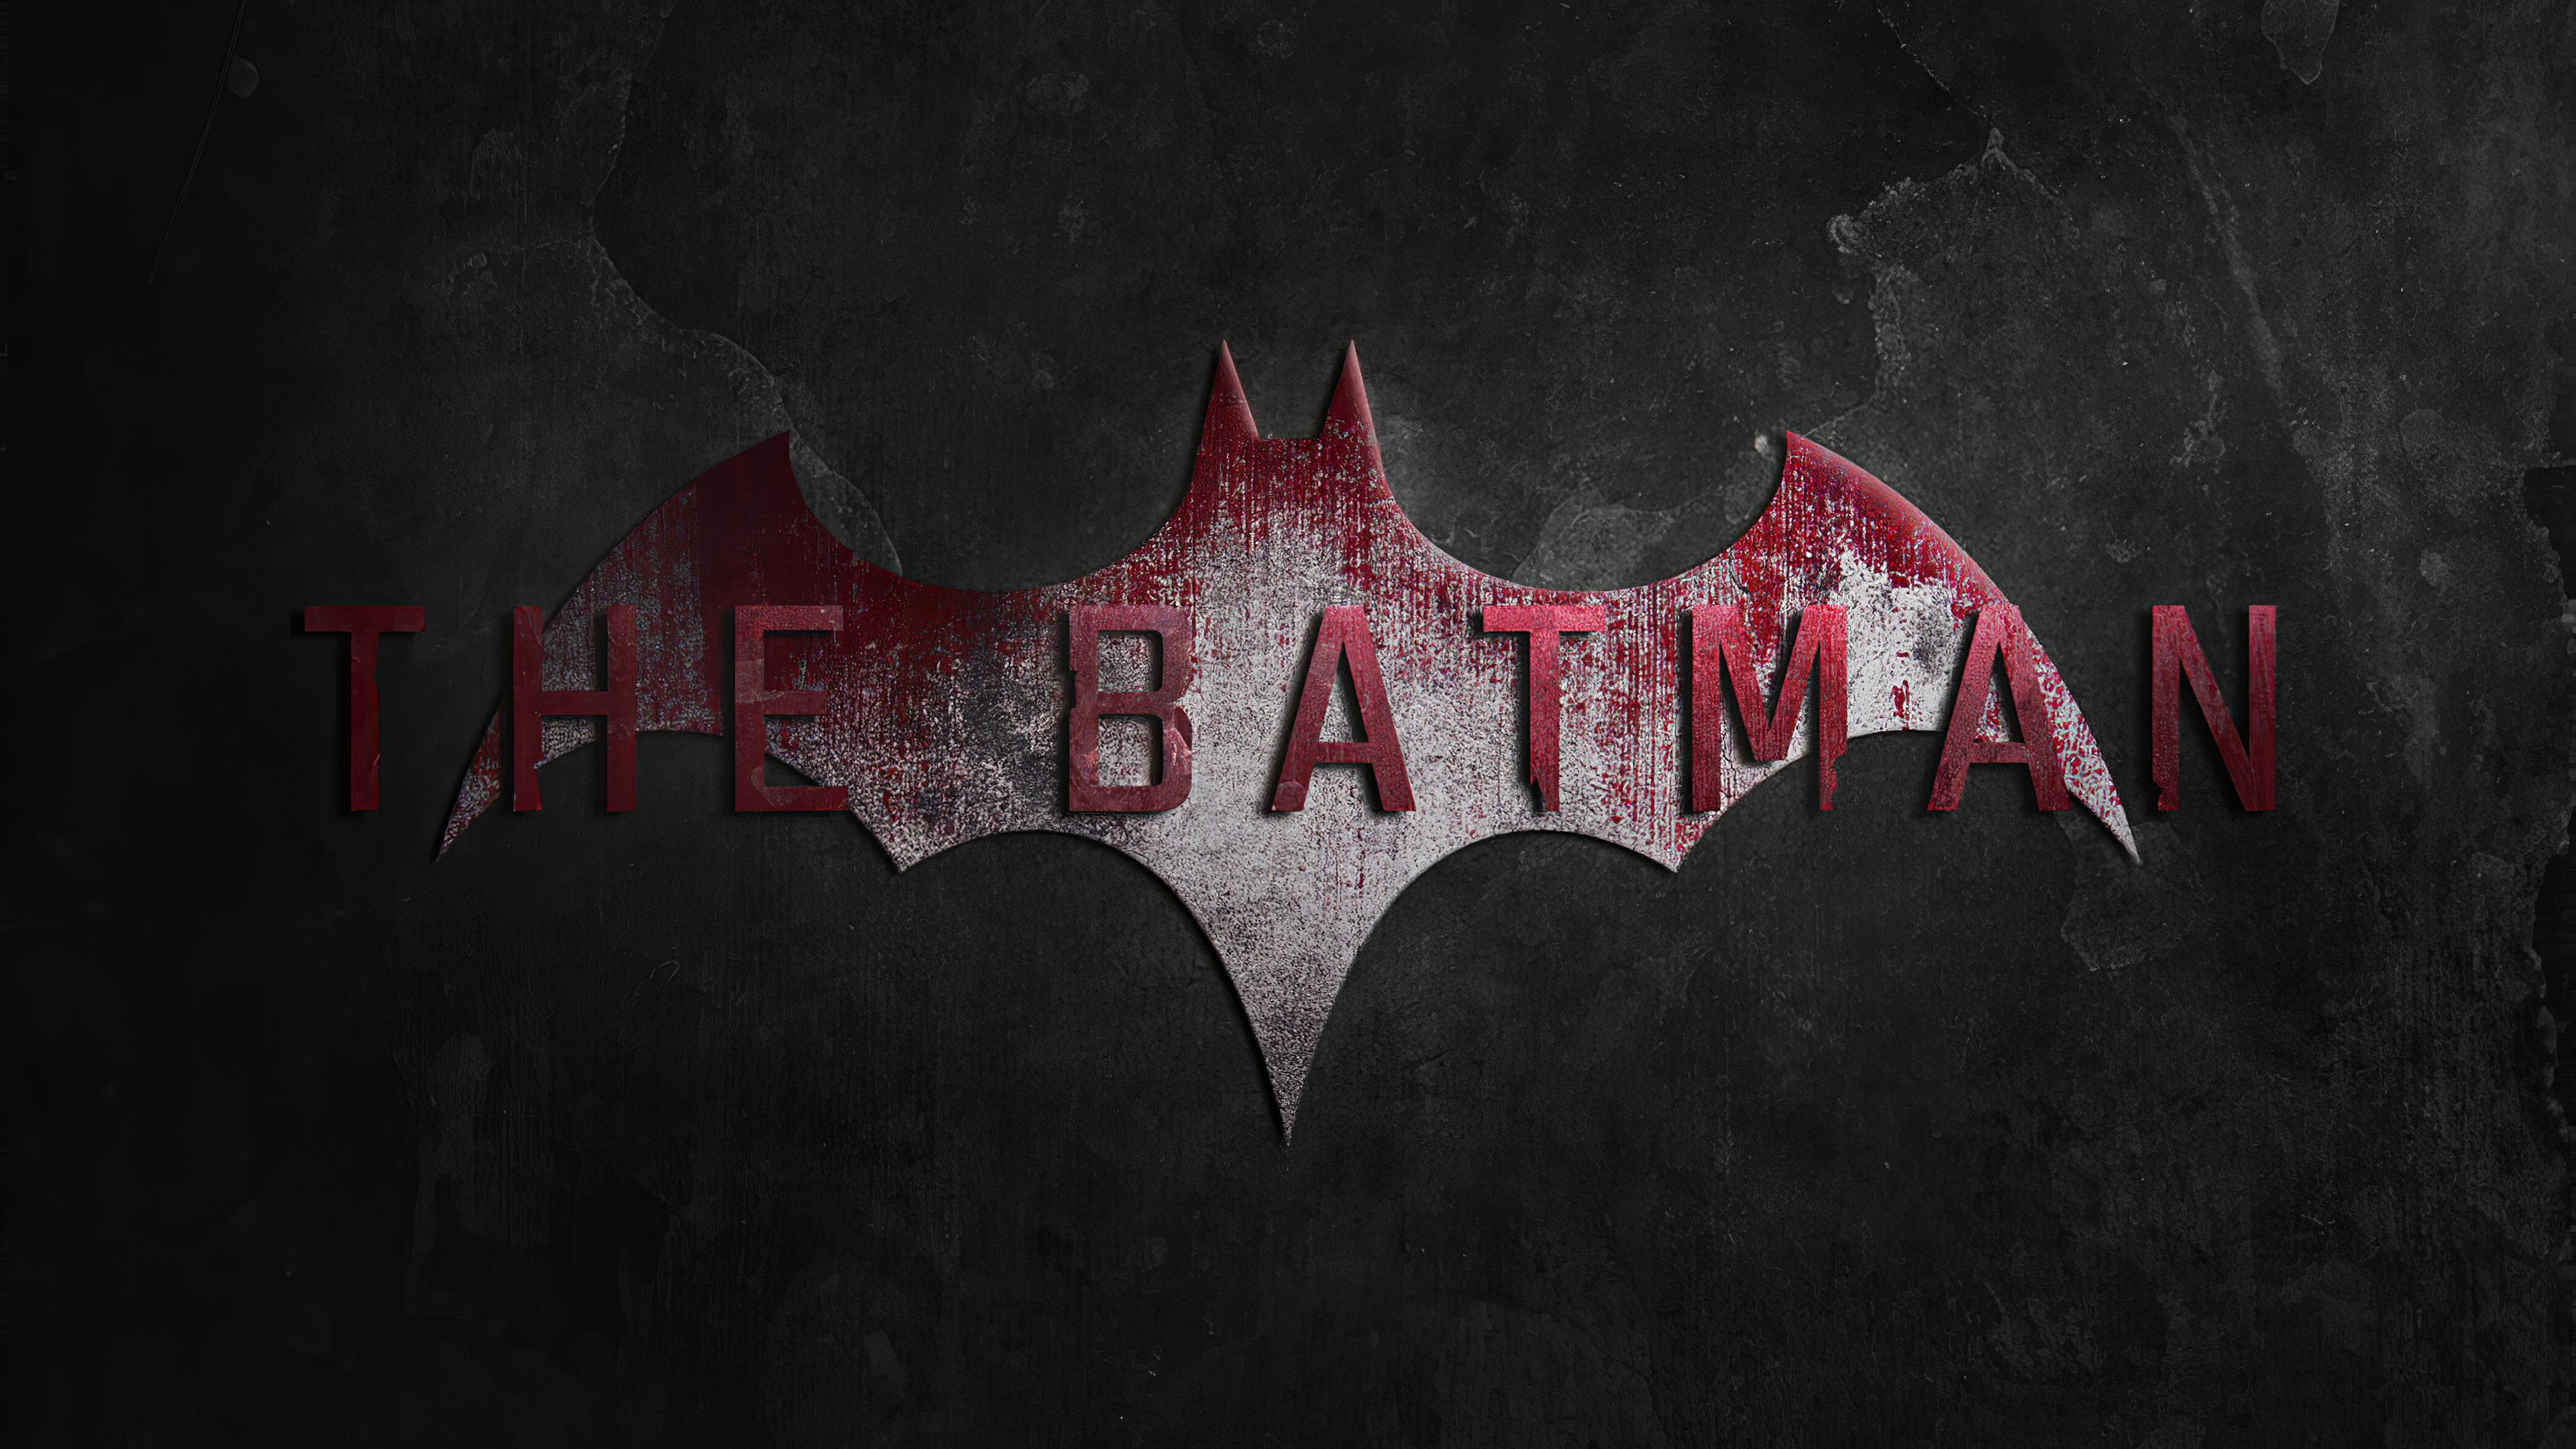 The Batman 2021 Logo Wallpapers